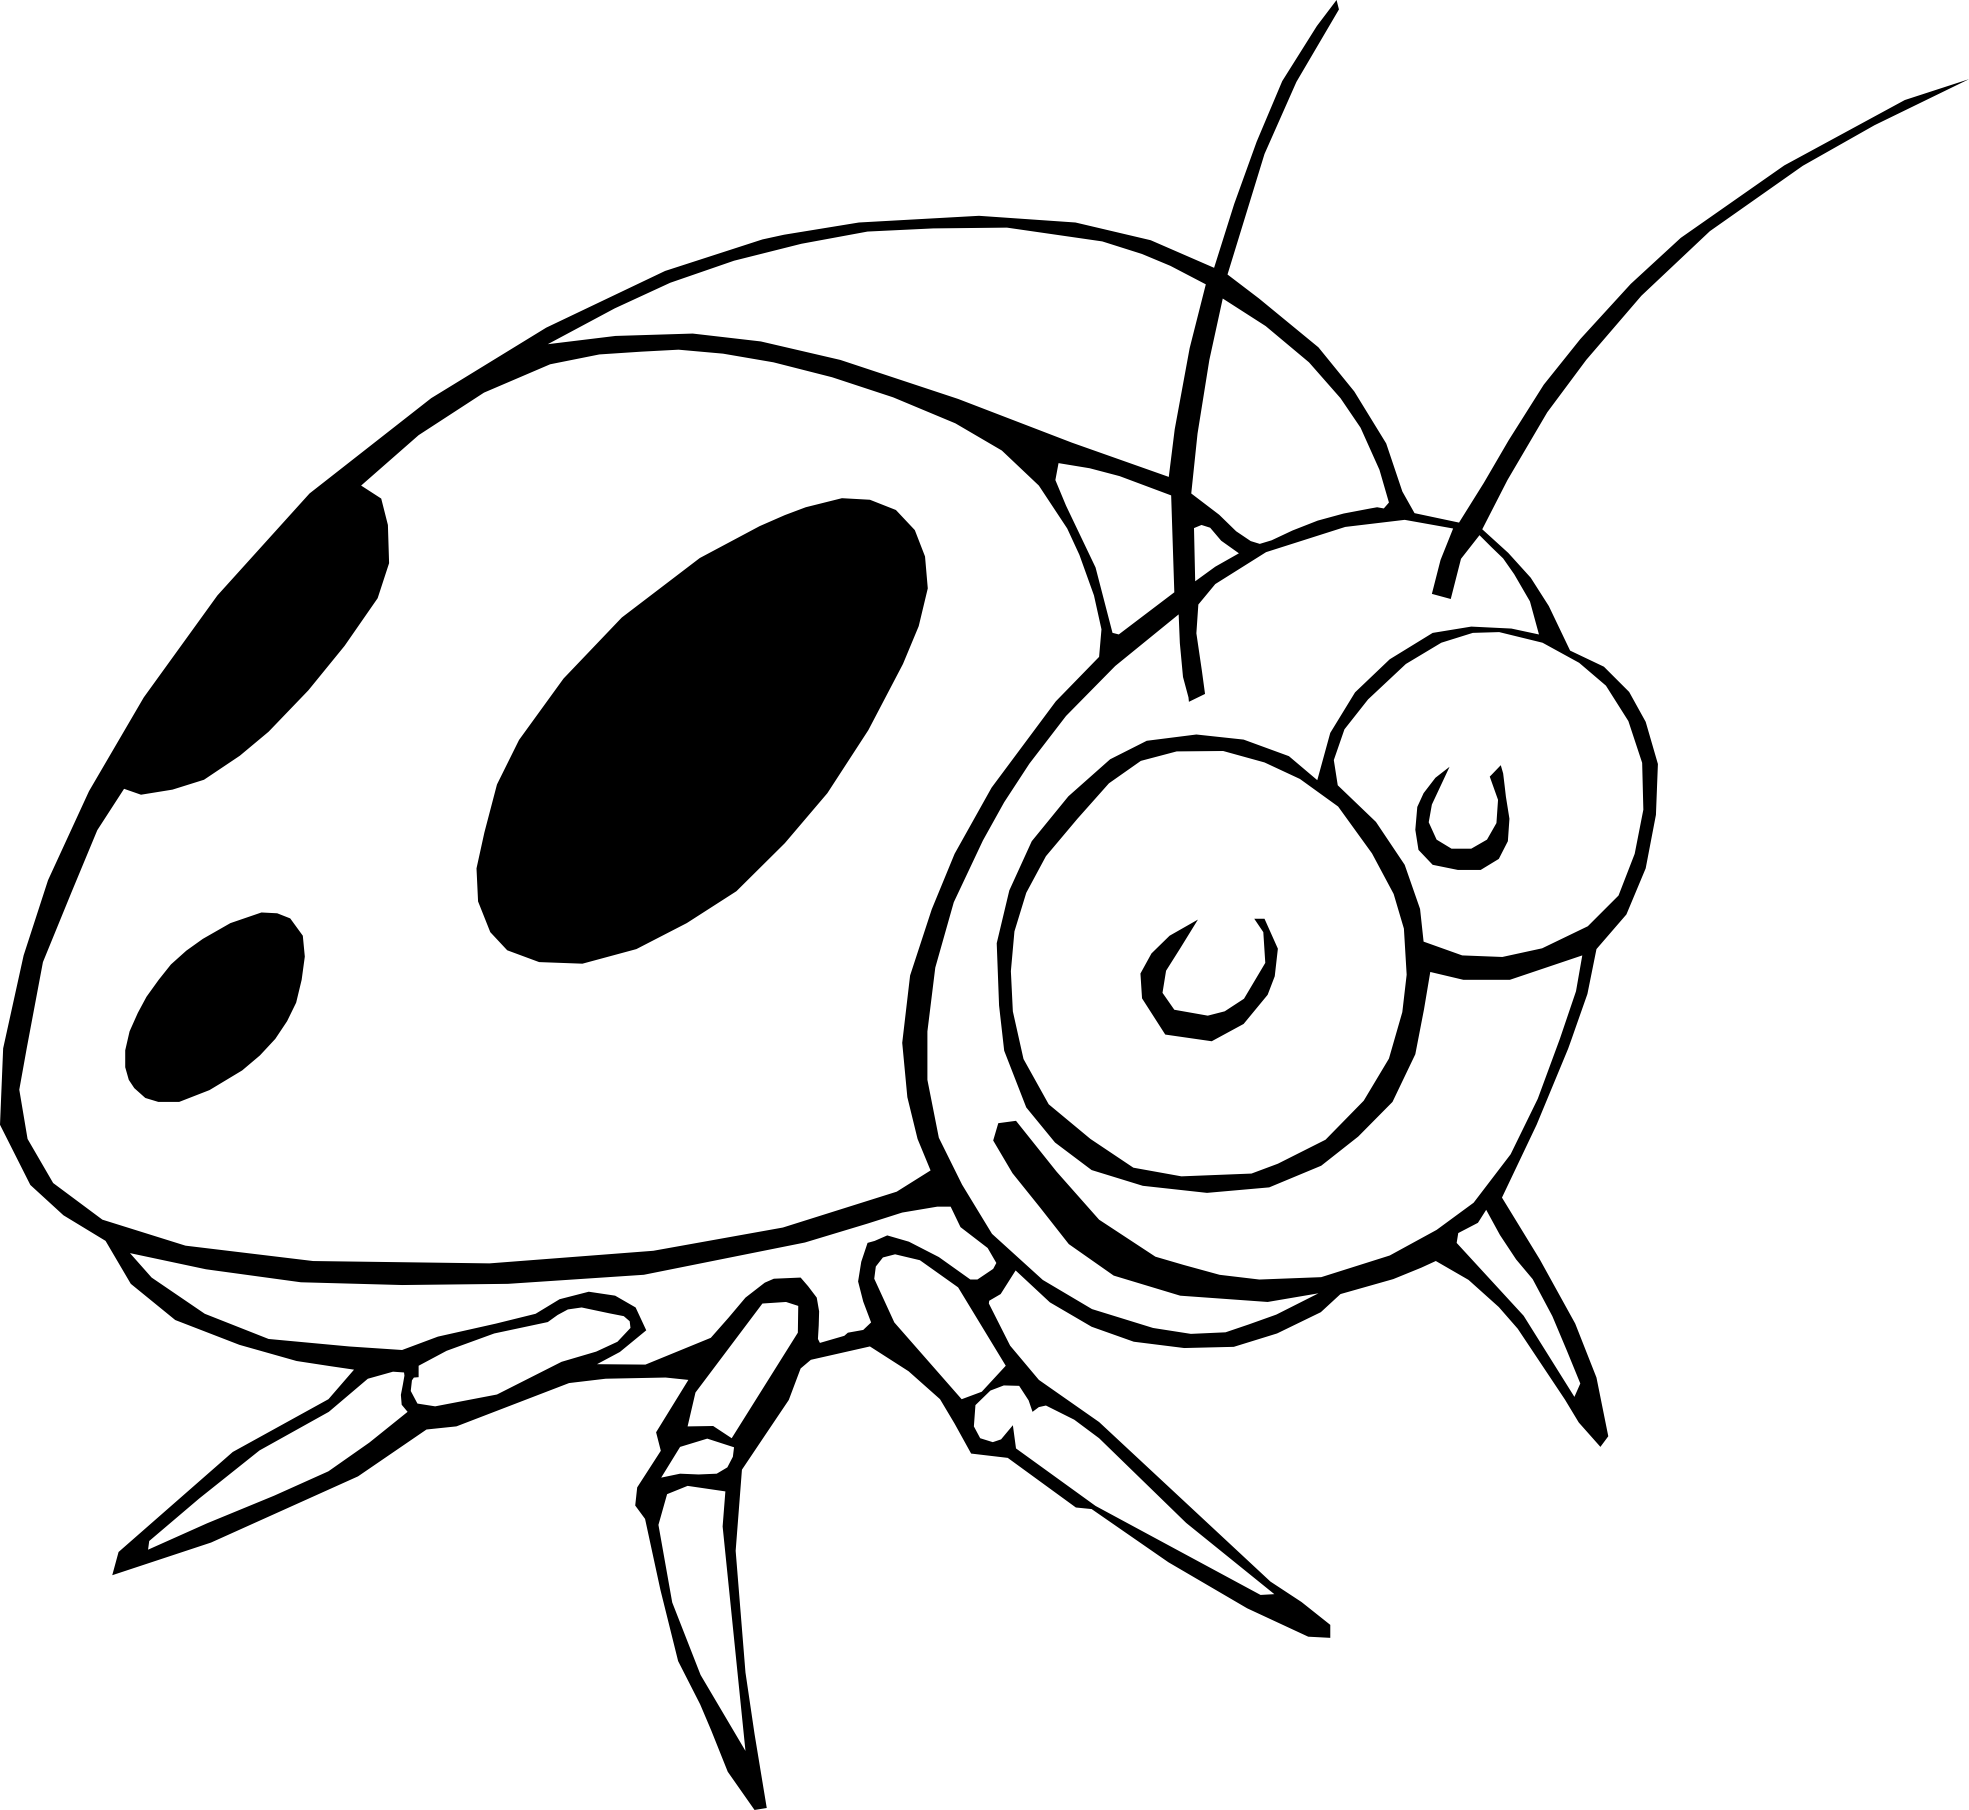 Ladybug outline clipart 7